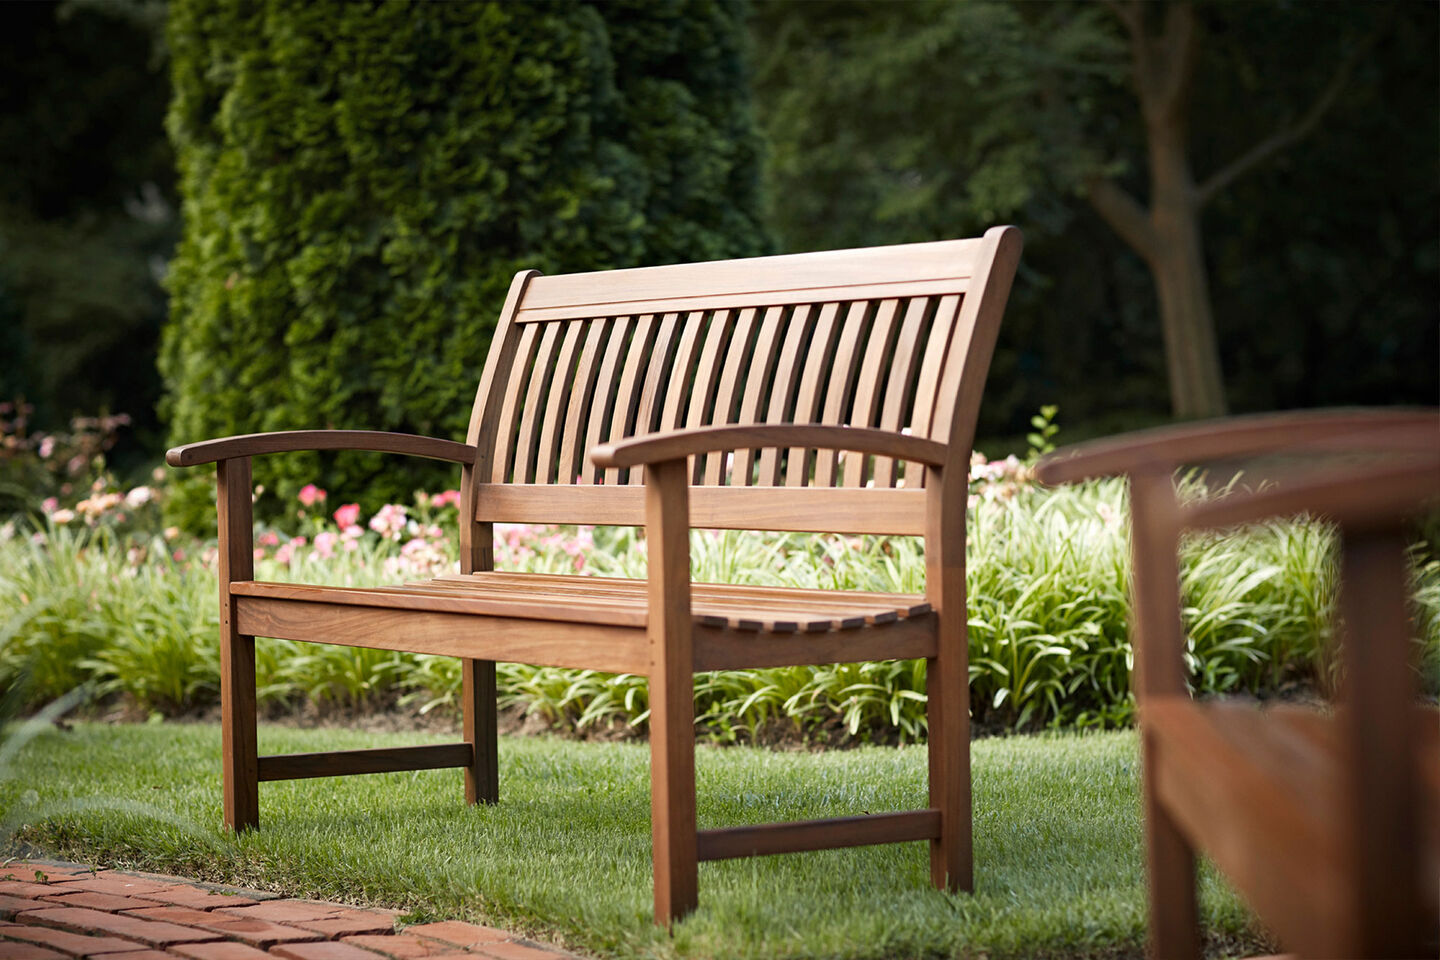 Classic Ipe bench by Jensen Outdoor in lush backyard